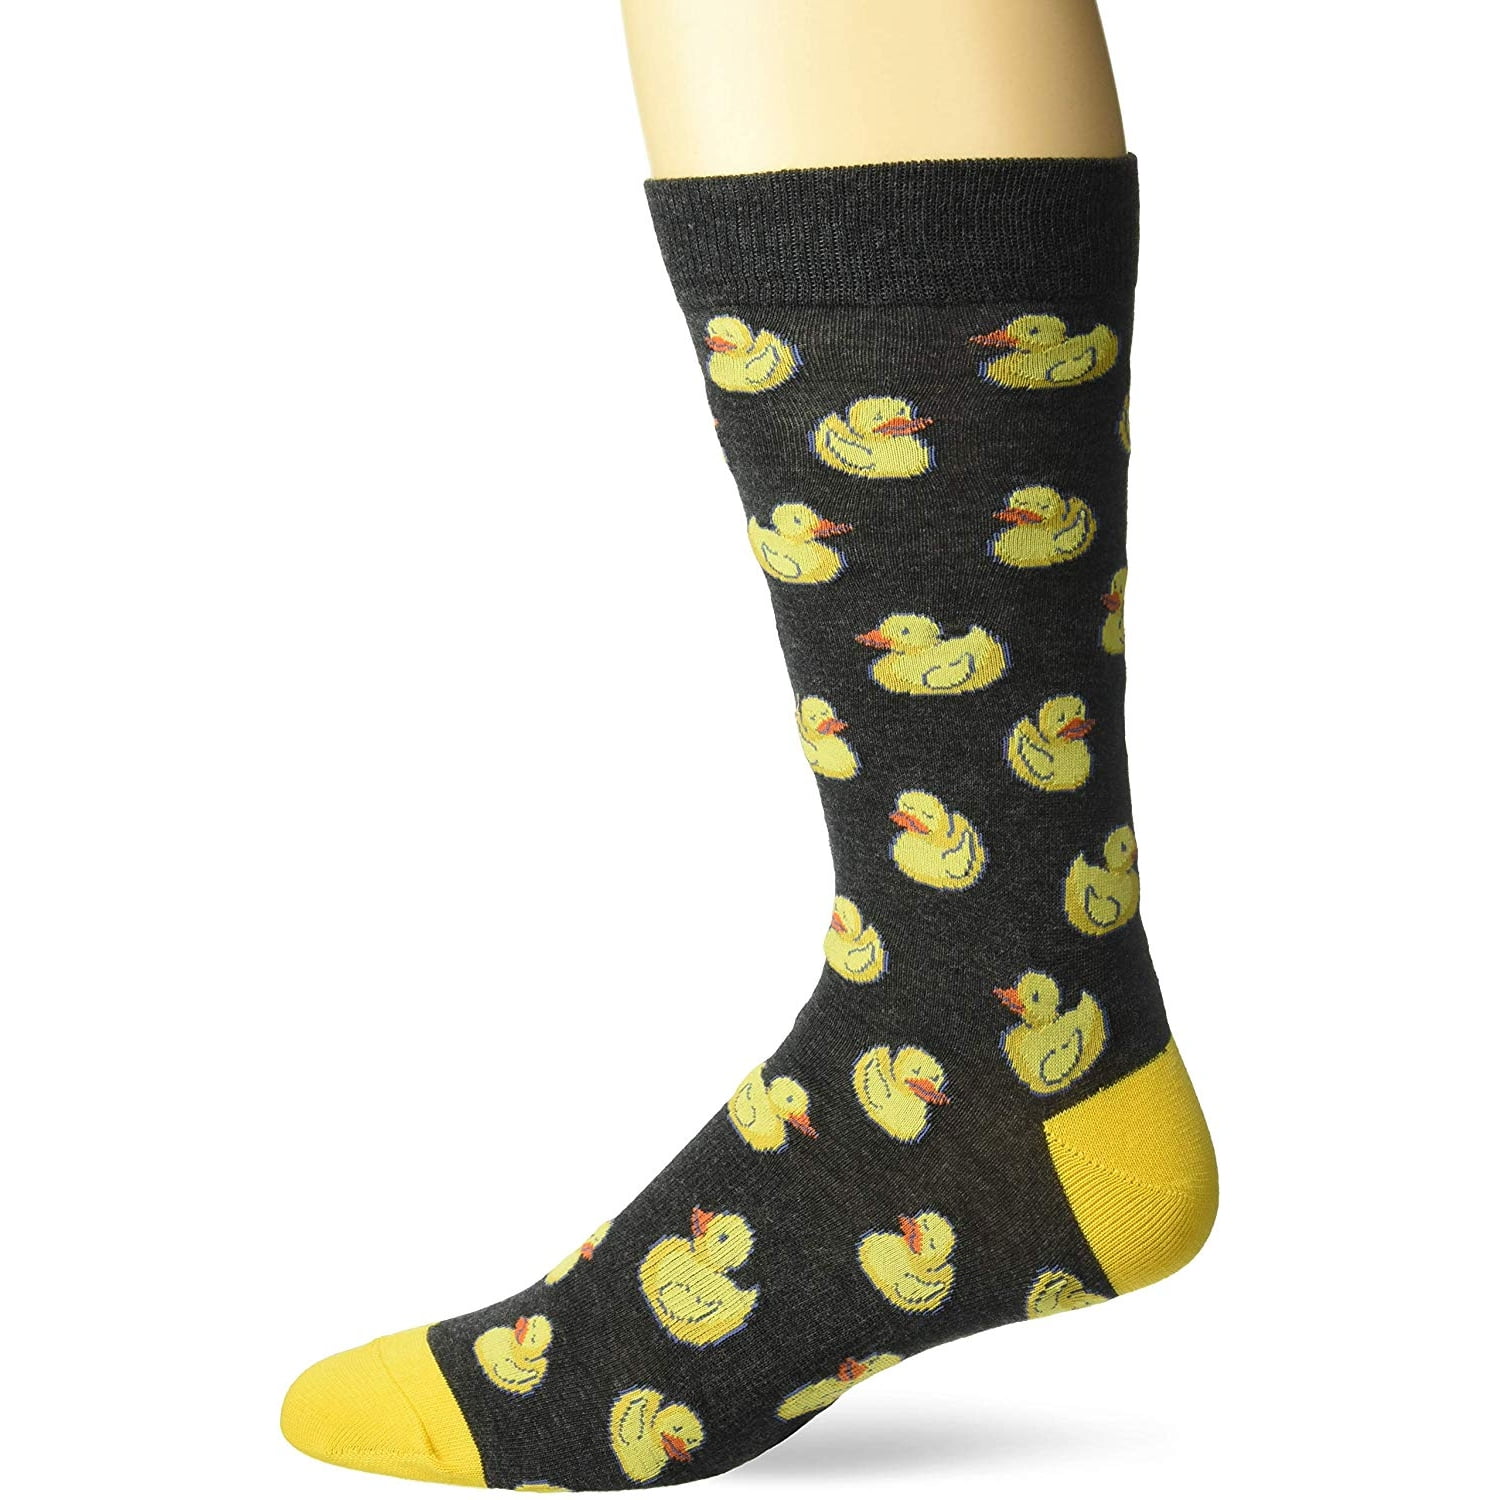 K. Bell Socks - Rubber Duck Mens Crew Socks - Walmart.com - Walmart.com